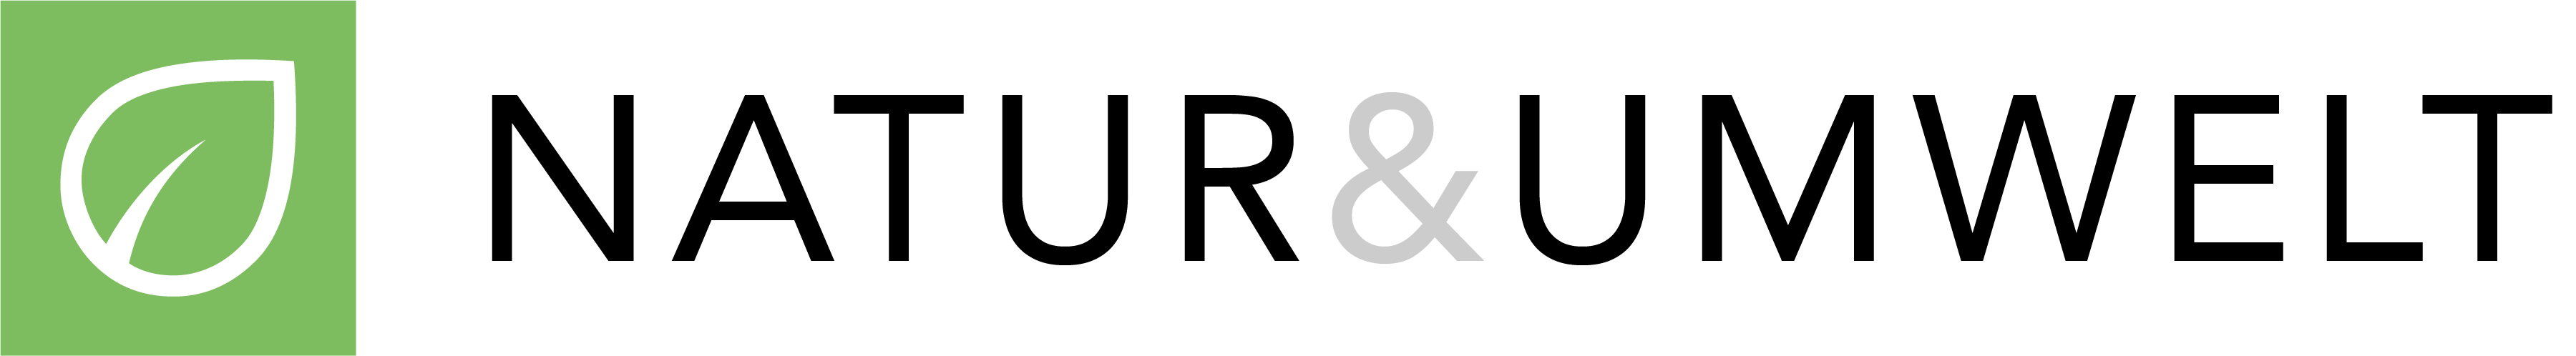 bk2-logo-natur-umwelt